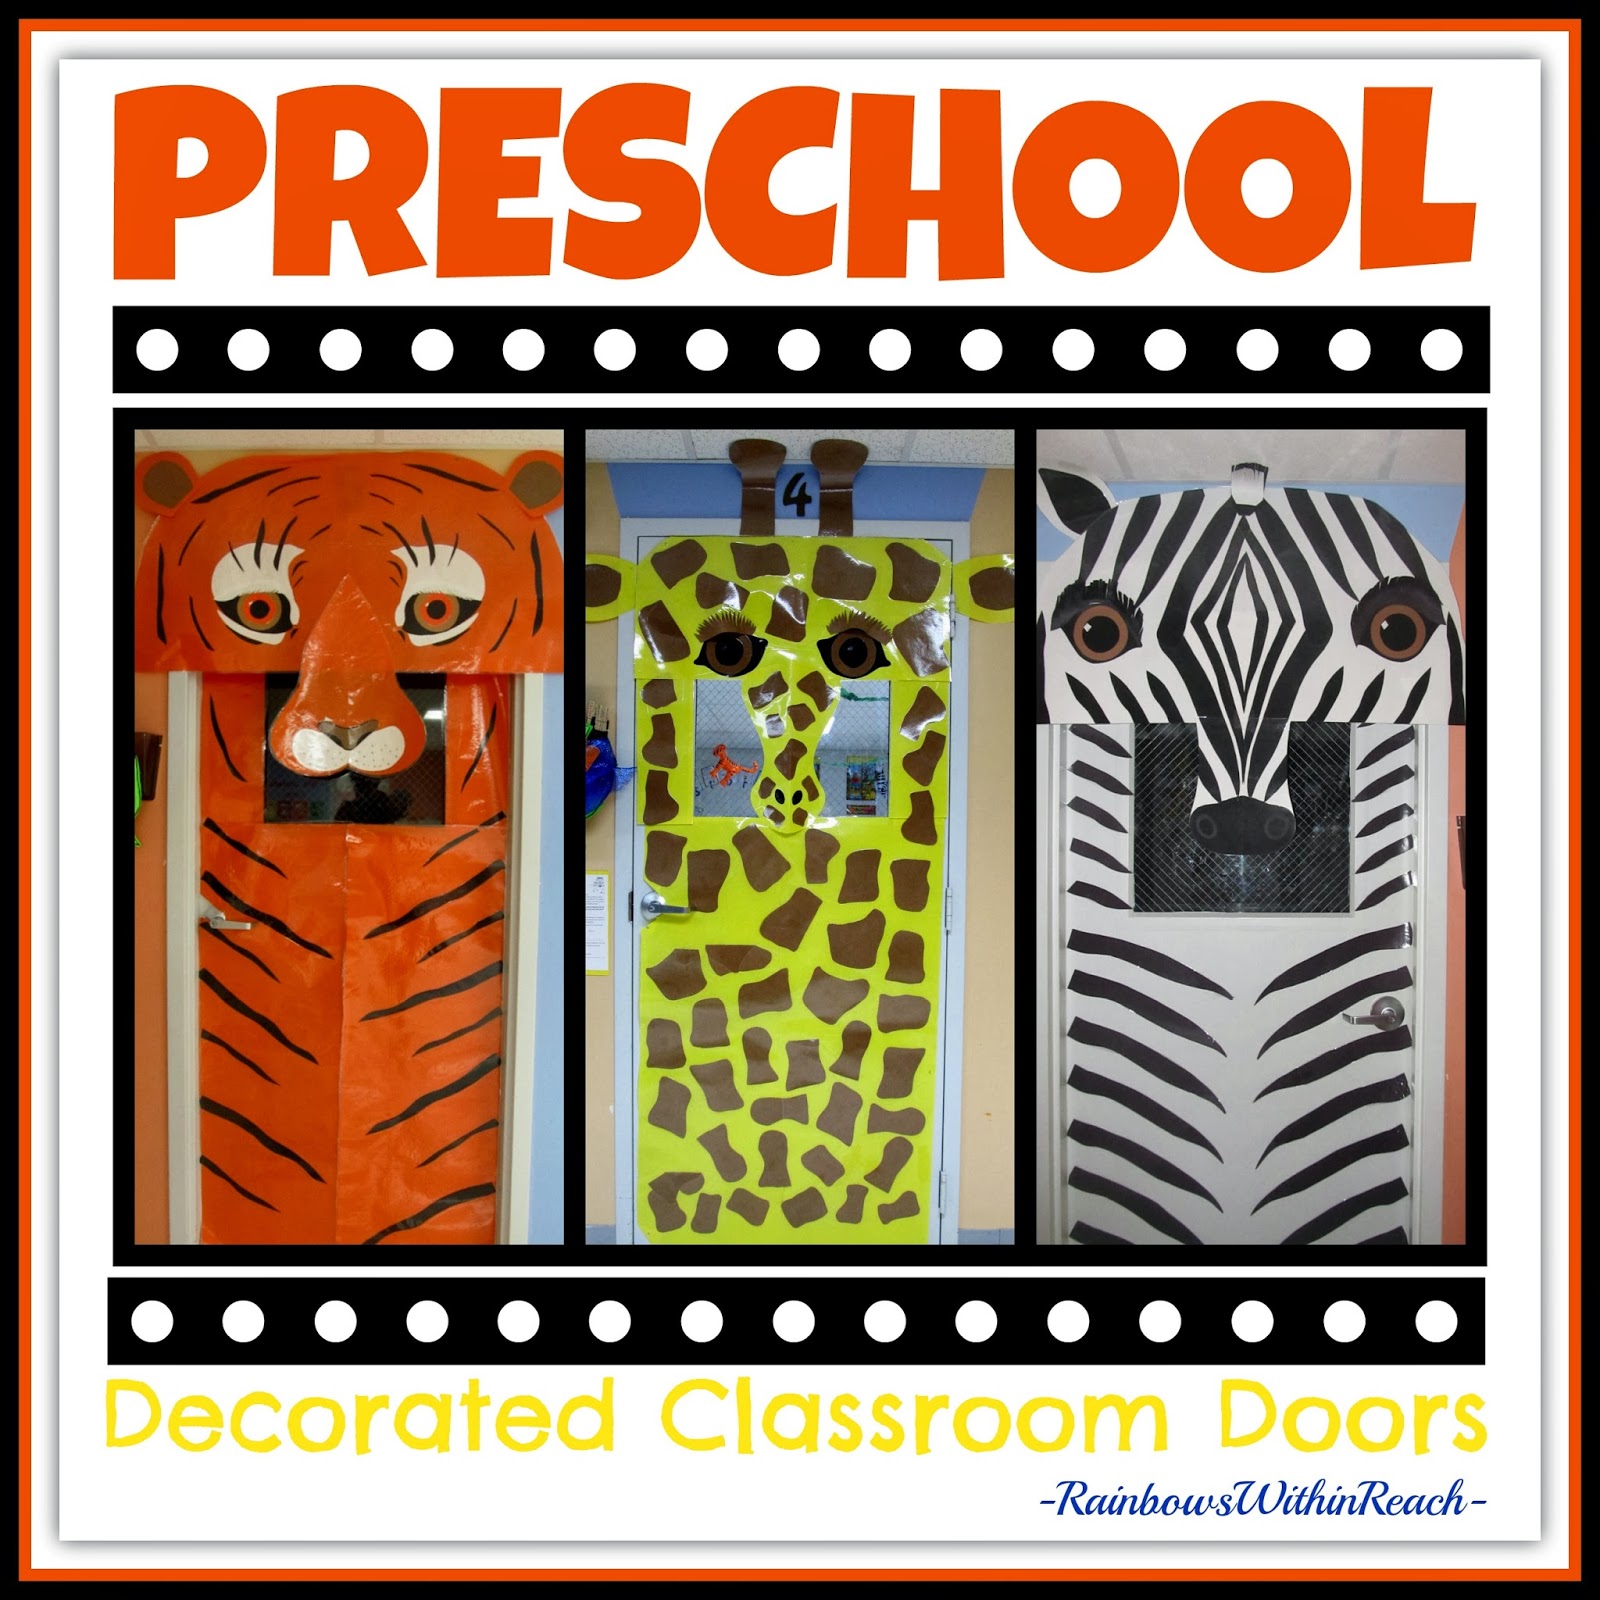 Decorated Classroom Doors using Jungle Animals in Preschool via RainbowsWithinReach